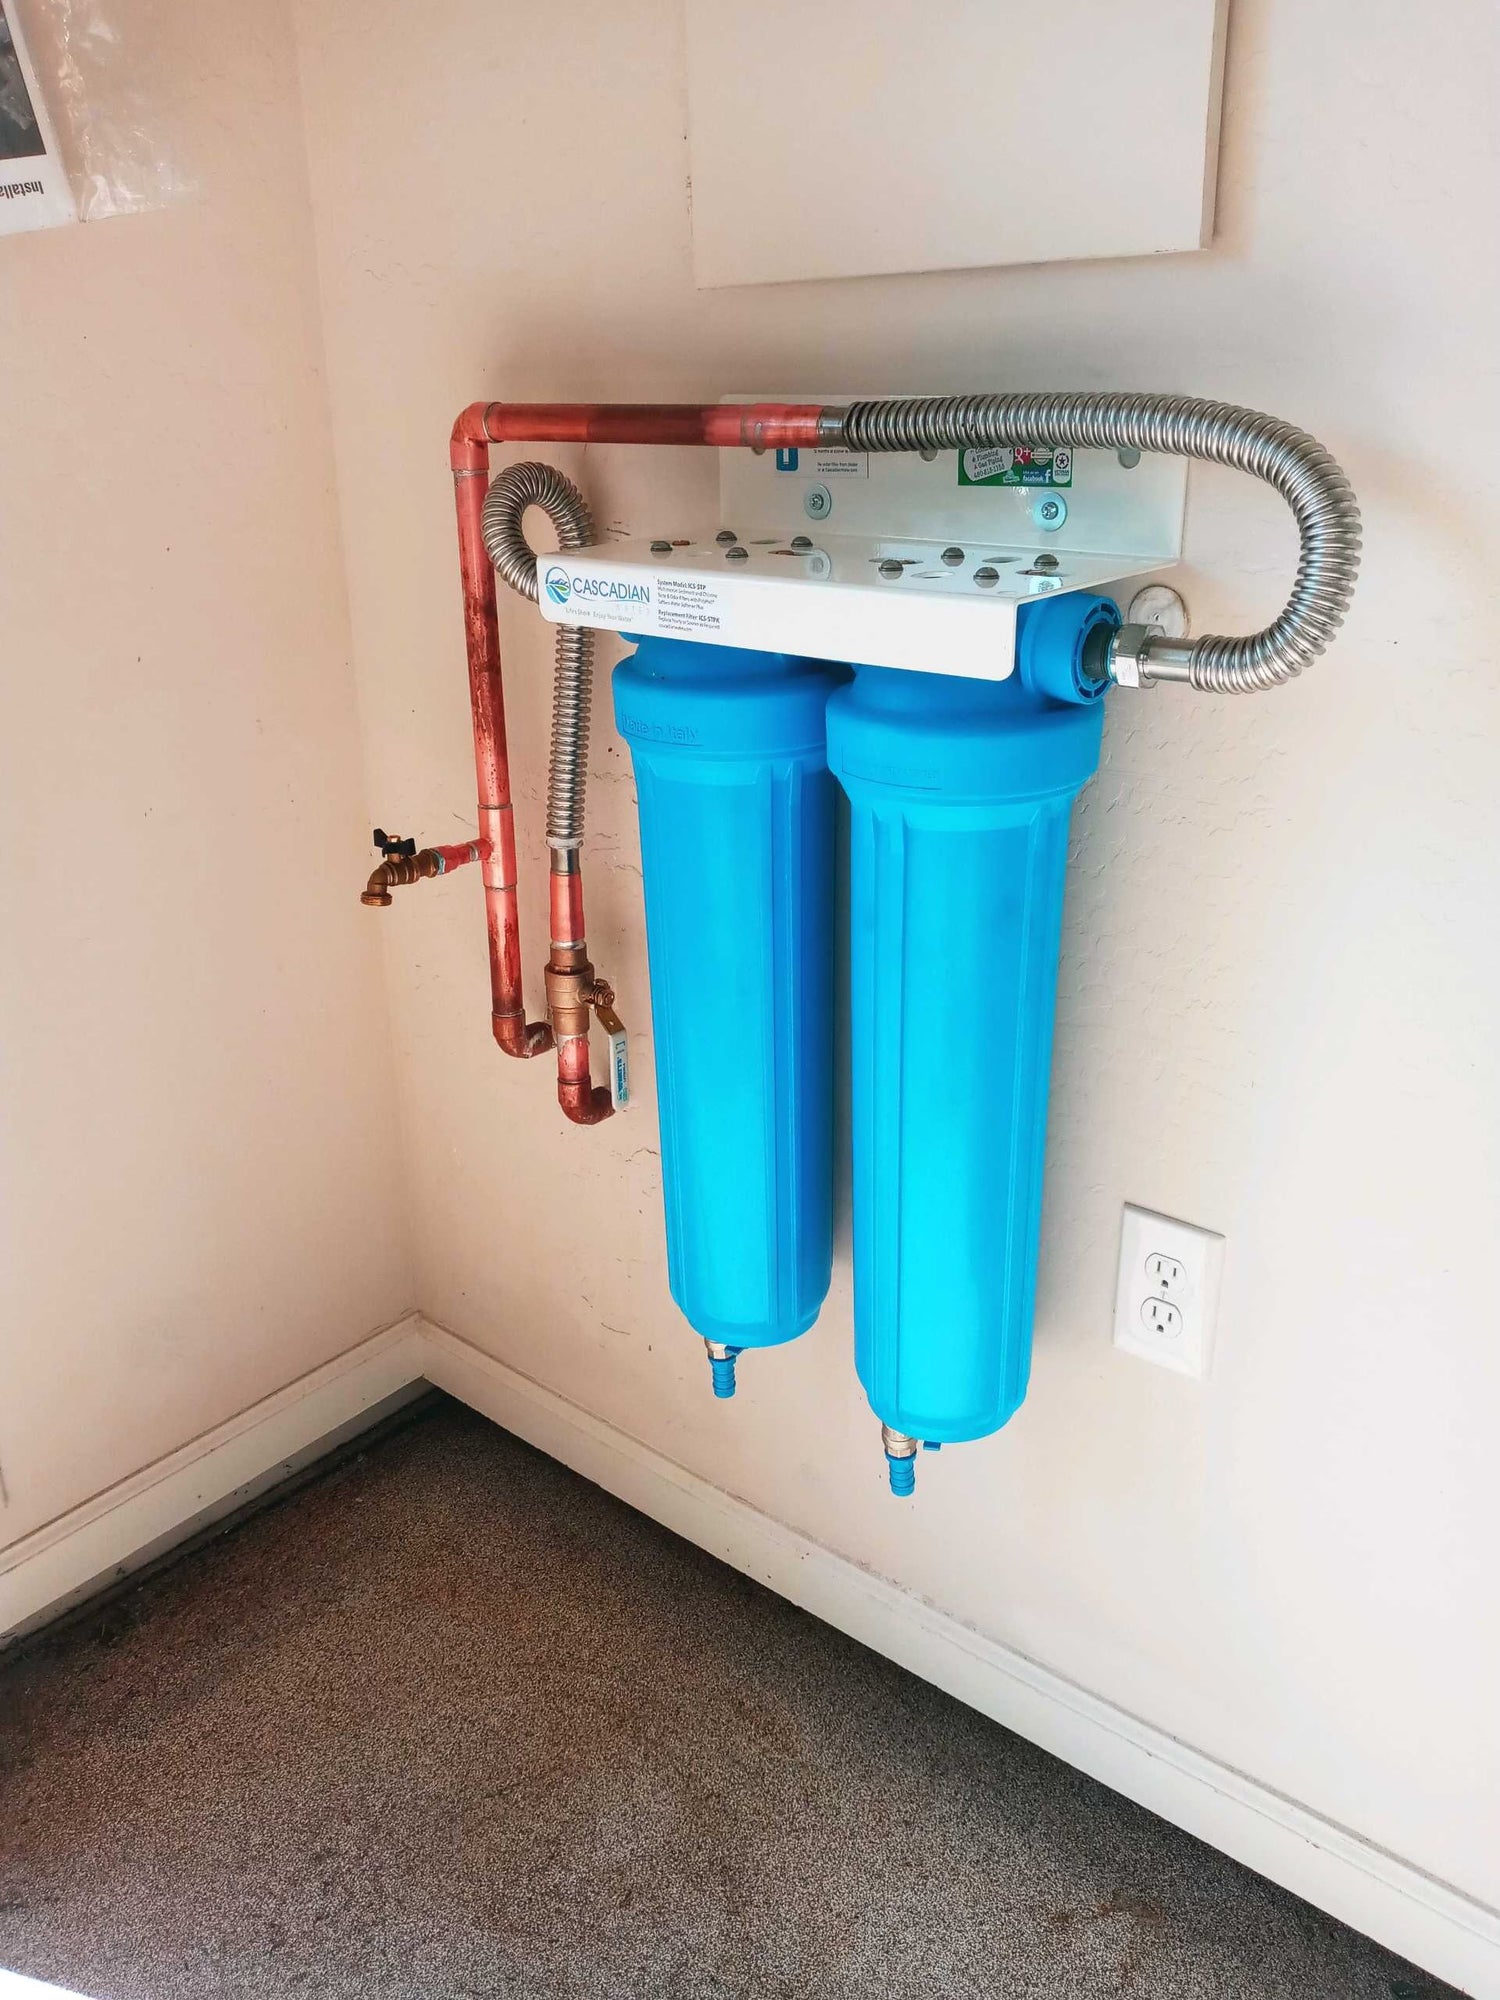 Installation of Cascadian Water ICS PolyHalt Softener